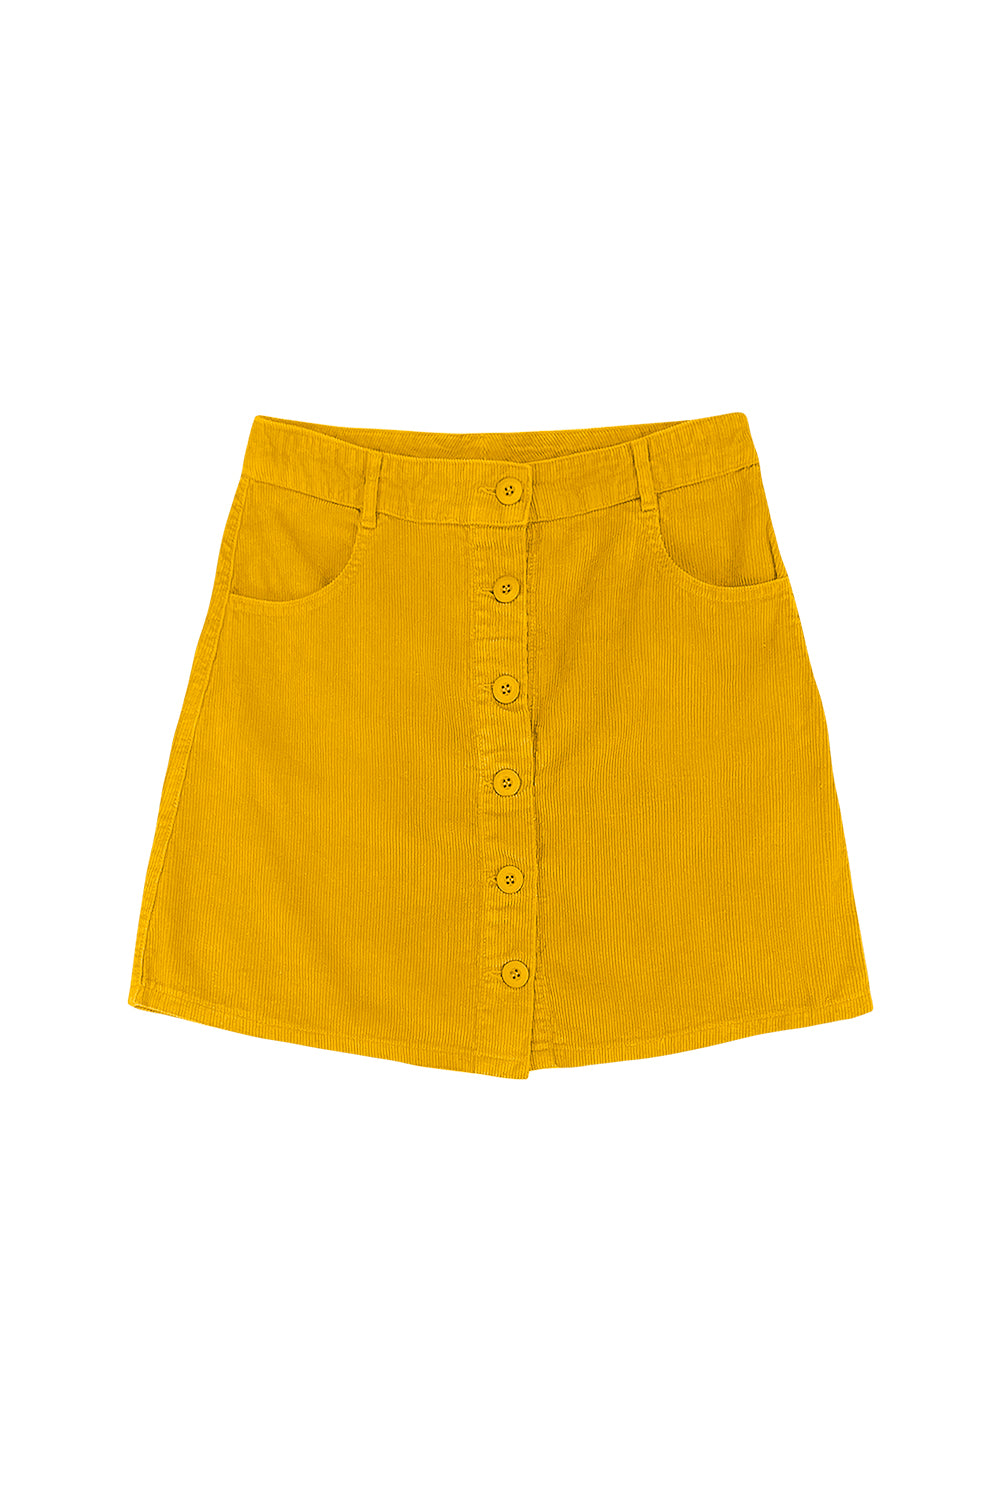 Corduroy Vassar Skirt | Jungmaven Hemp Clothing & Accessories / Color: Spicy Mustard